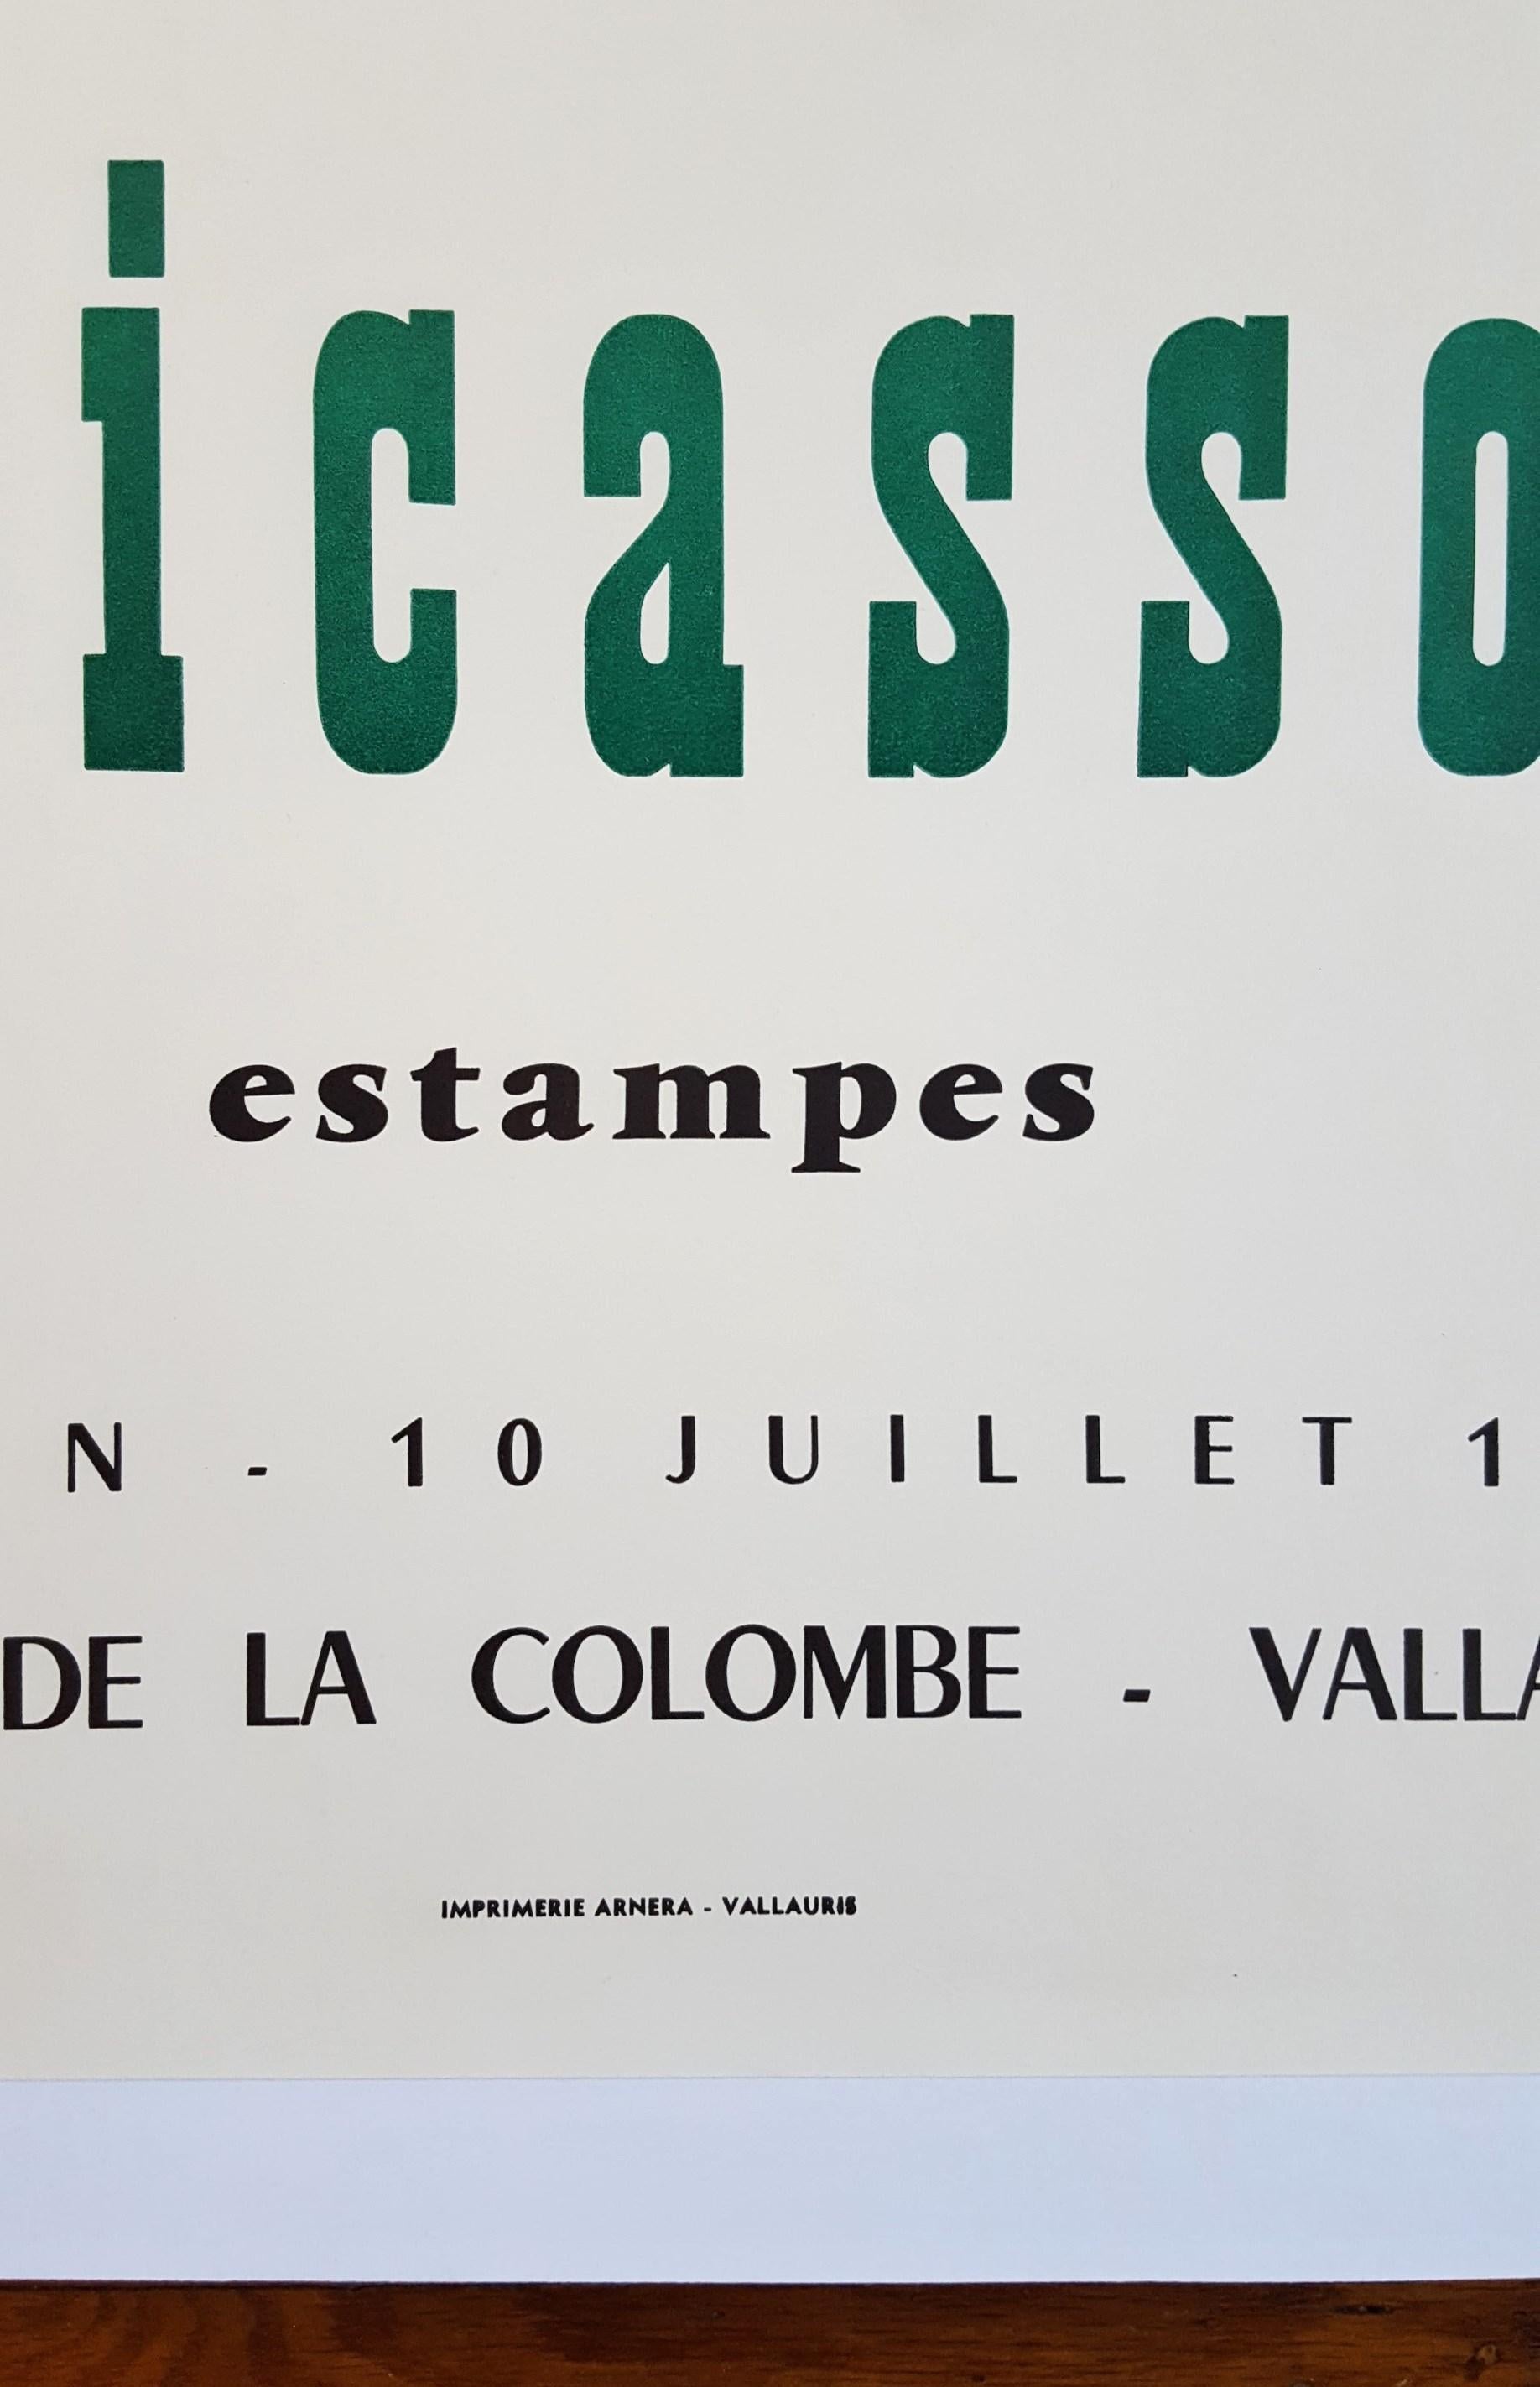 Expo 59 - Galerie de la Colombe 2